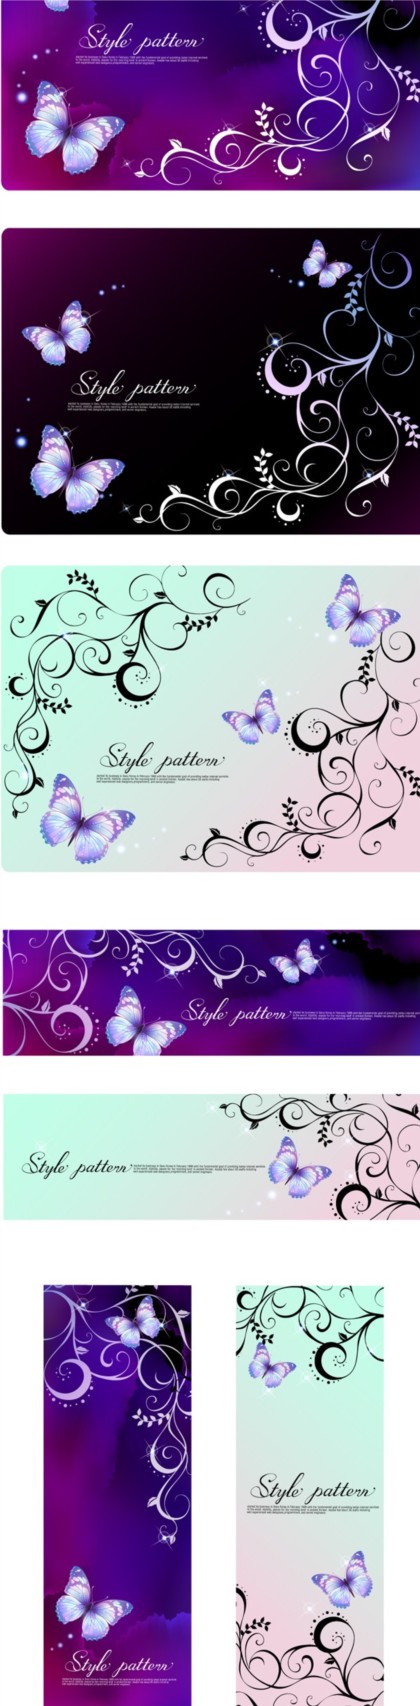 purple dream butterfly pattern background vector